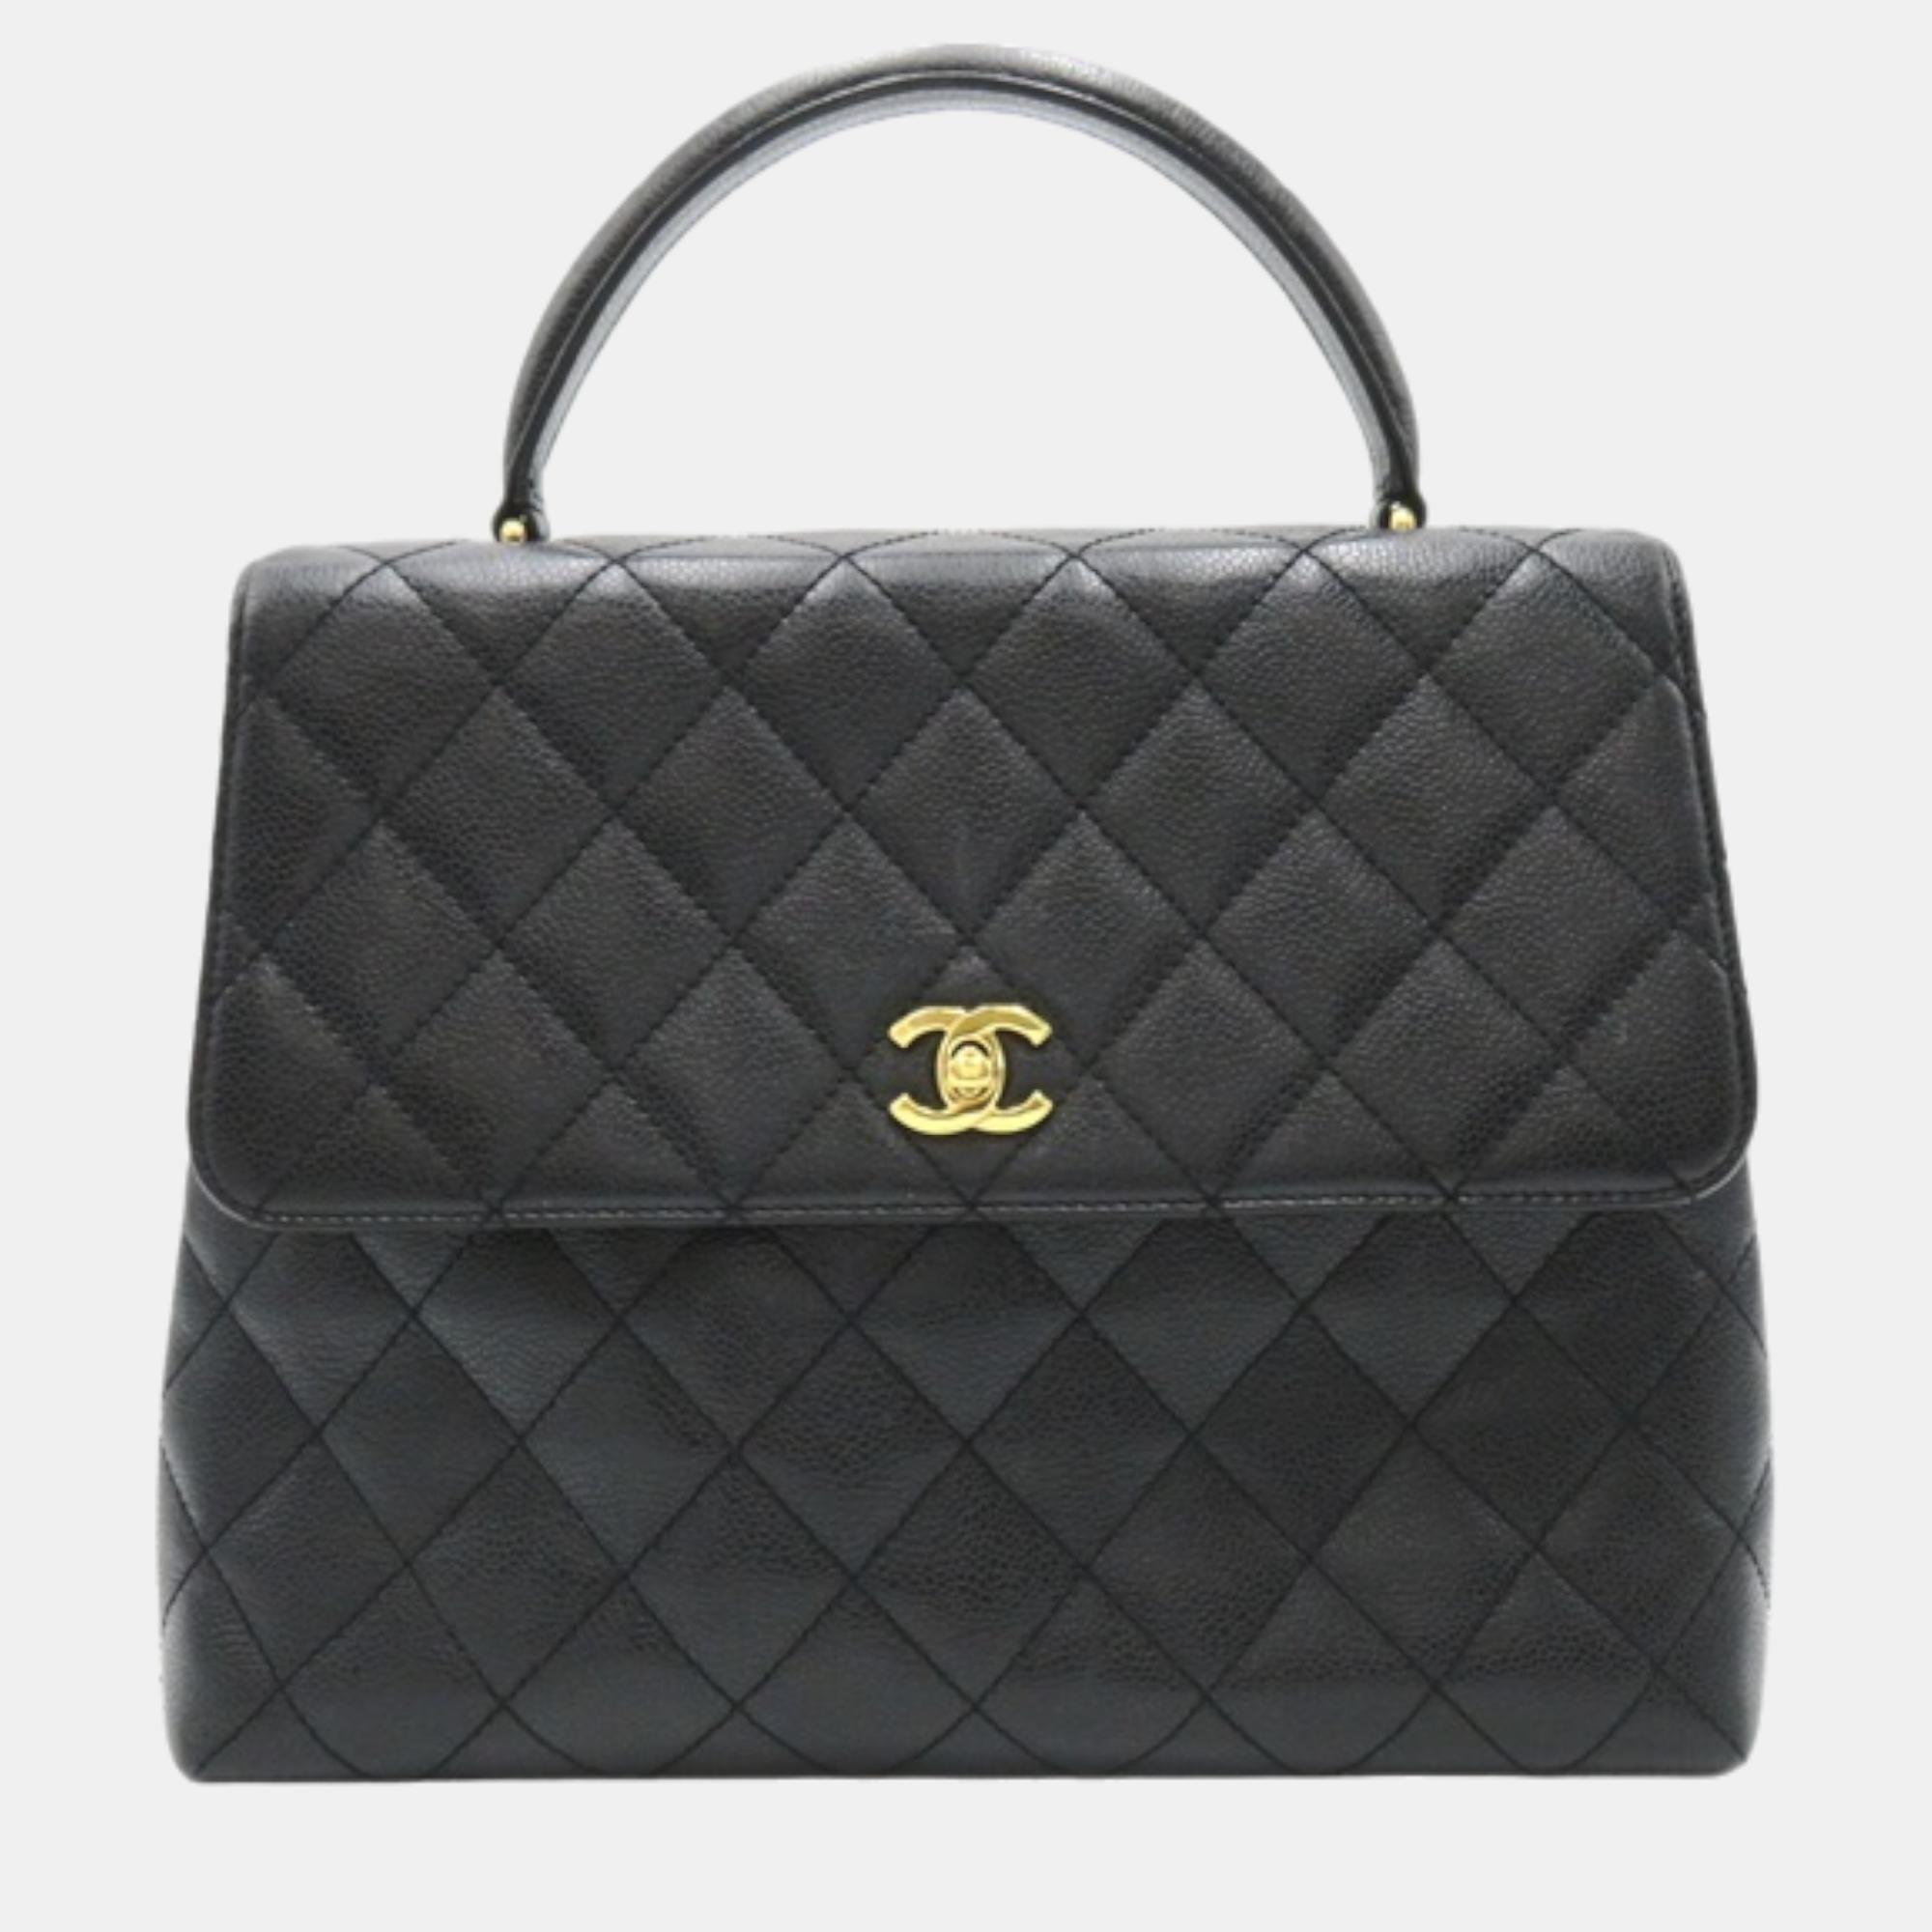 Chanel black leather cc caviar kelly handbag